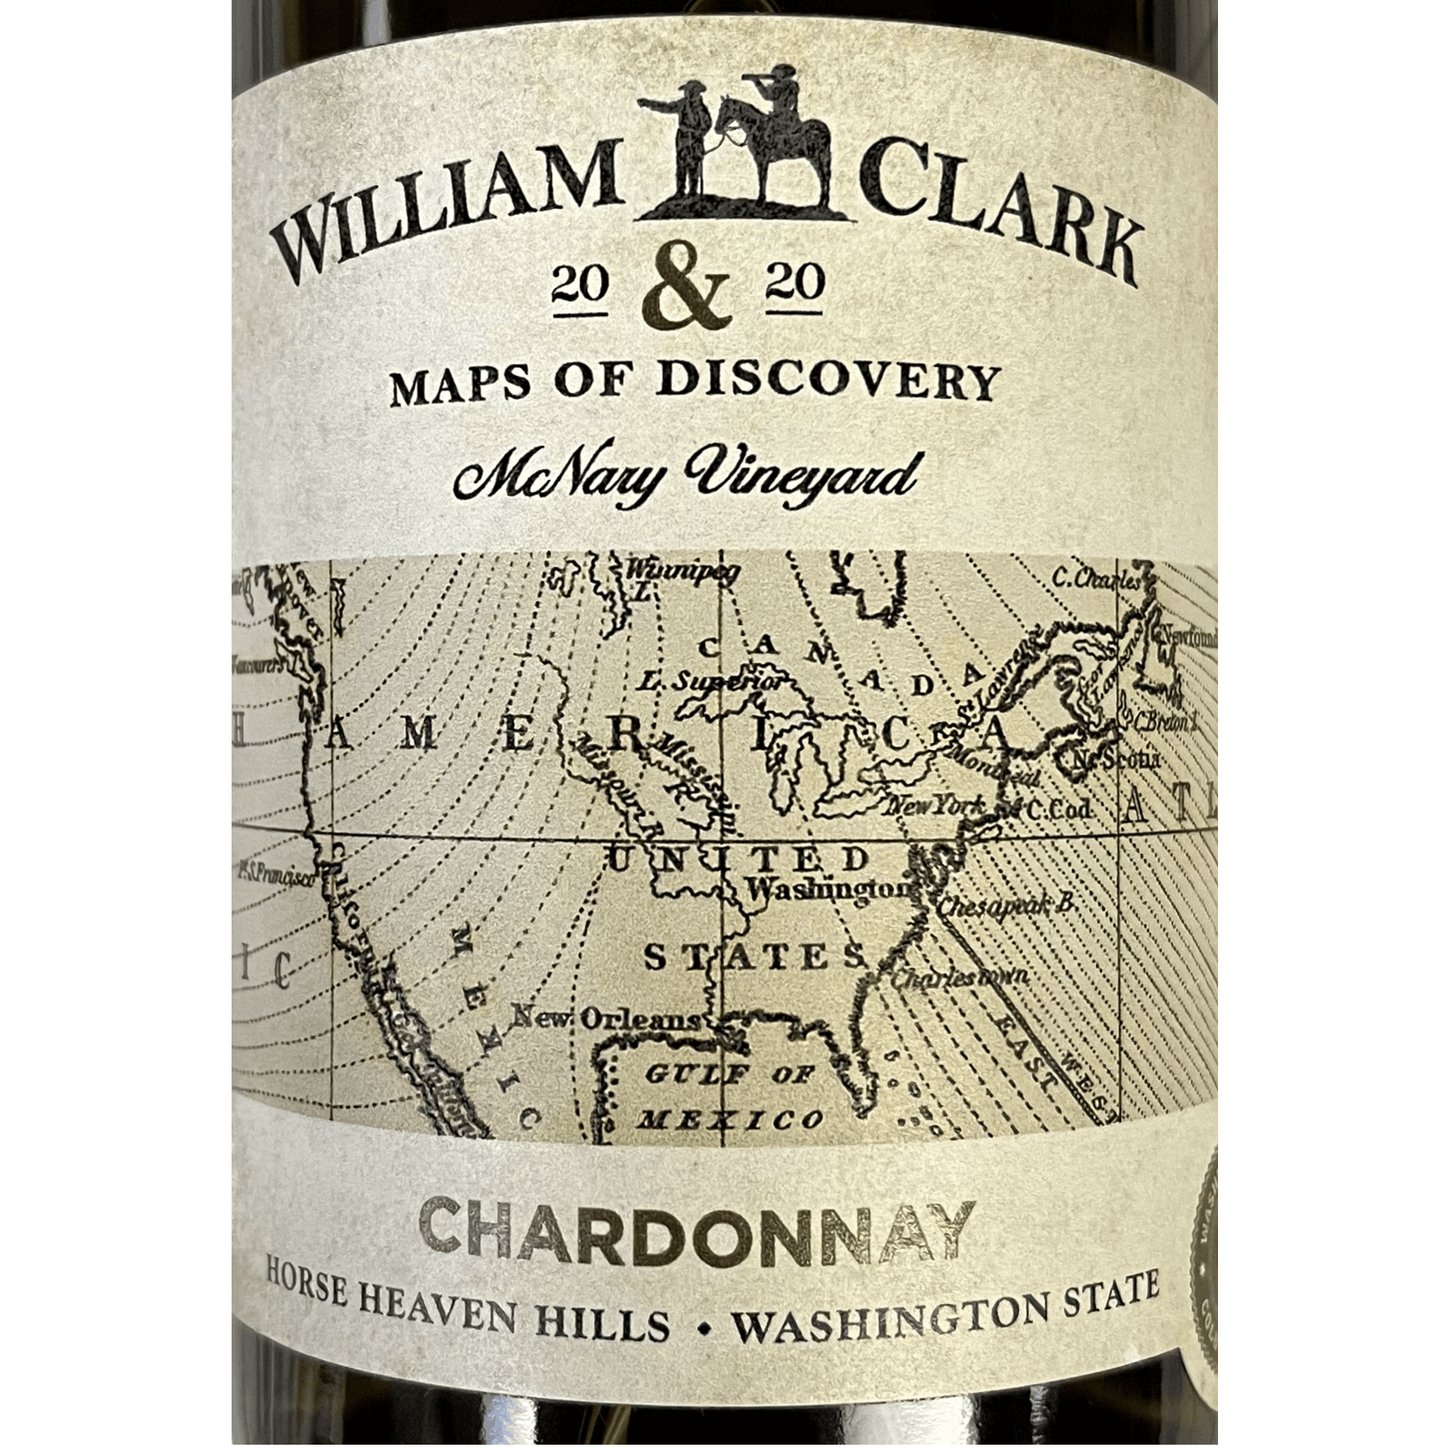 #043 - 2020 William Clark Chardonnay